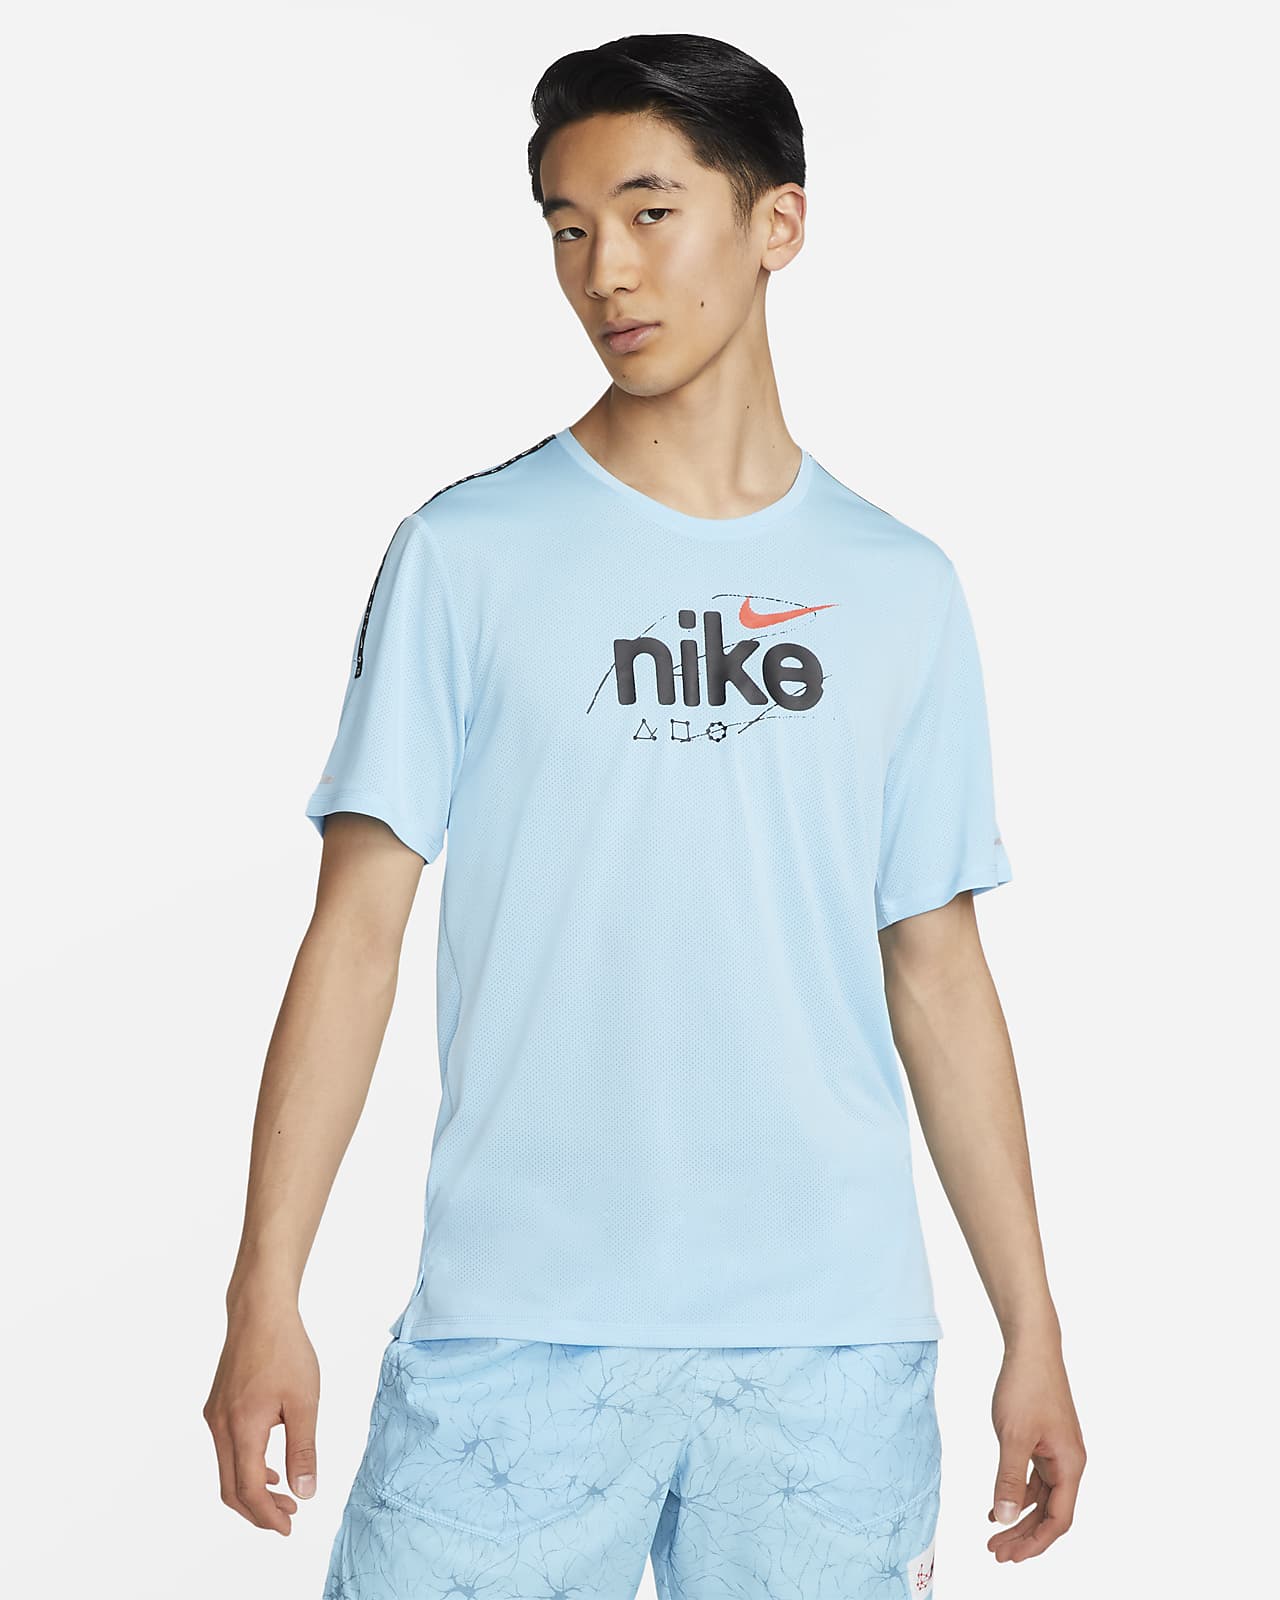 Nike Dri-FIT Miler D.Y.E. Men's Short-Sleeve Running Top